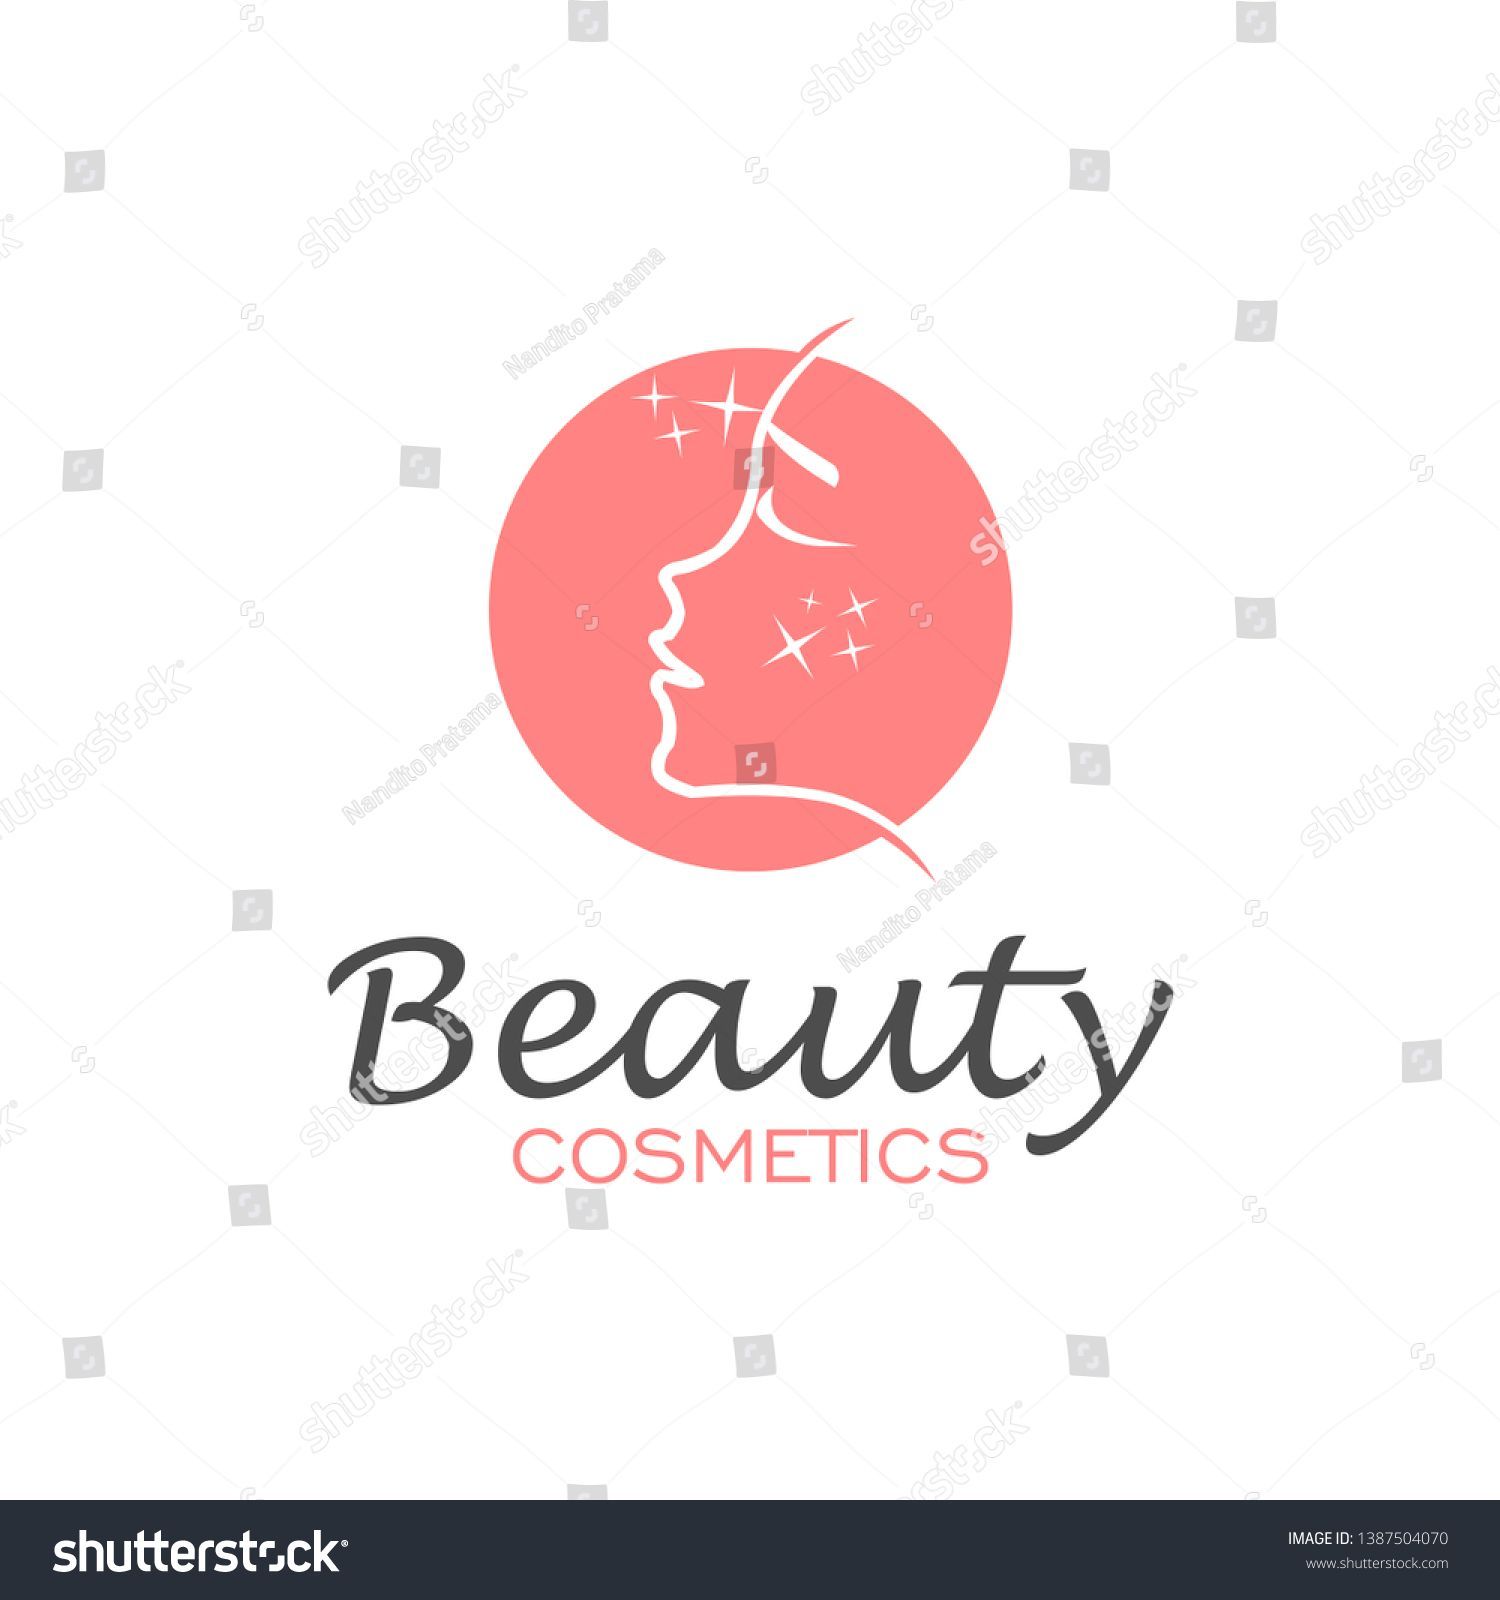 17 beauty Logo galleries ideas